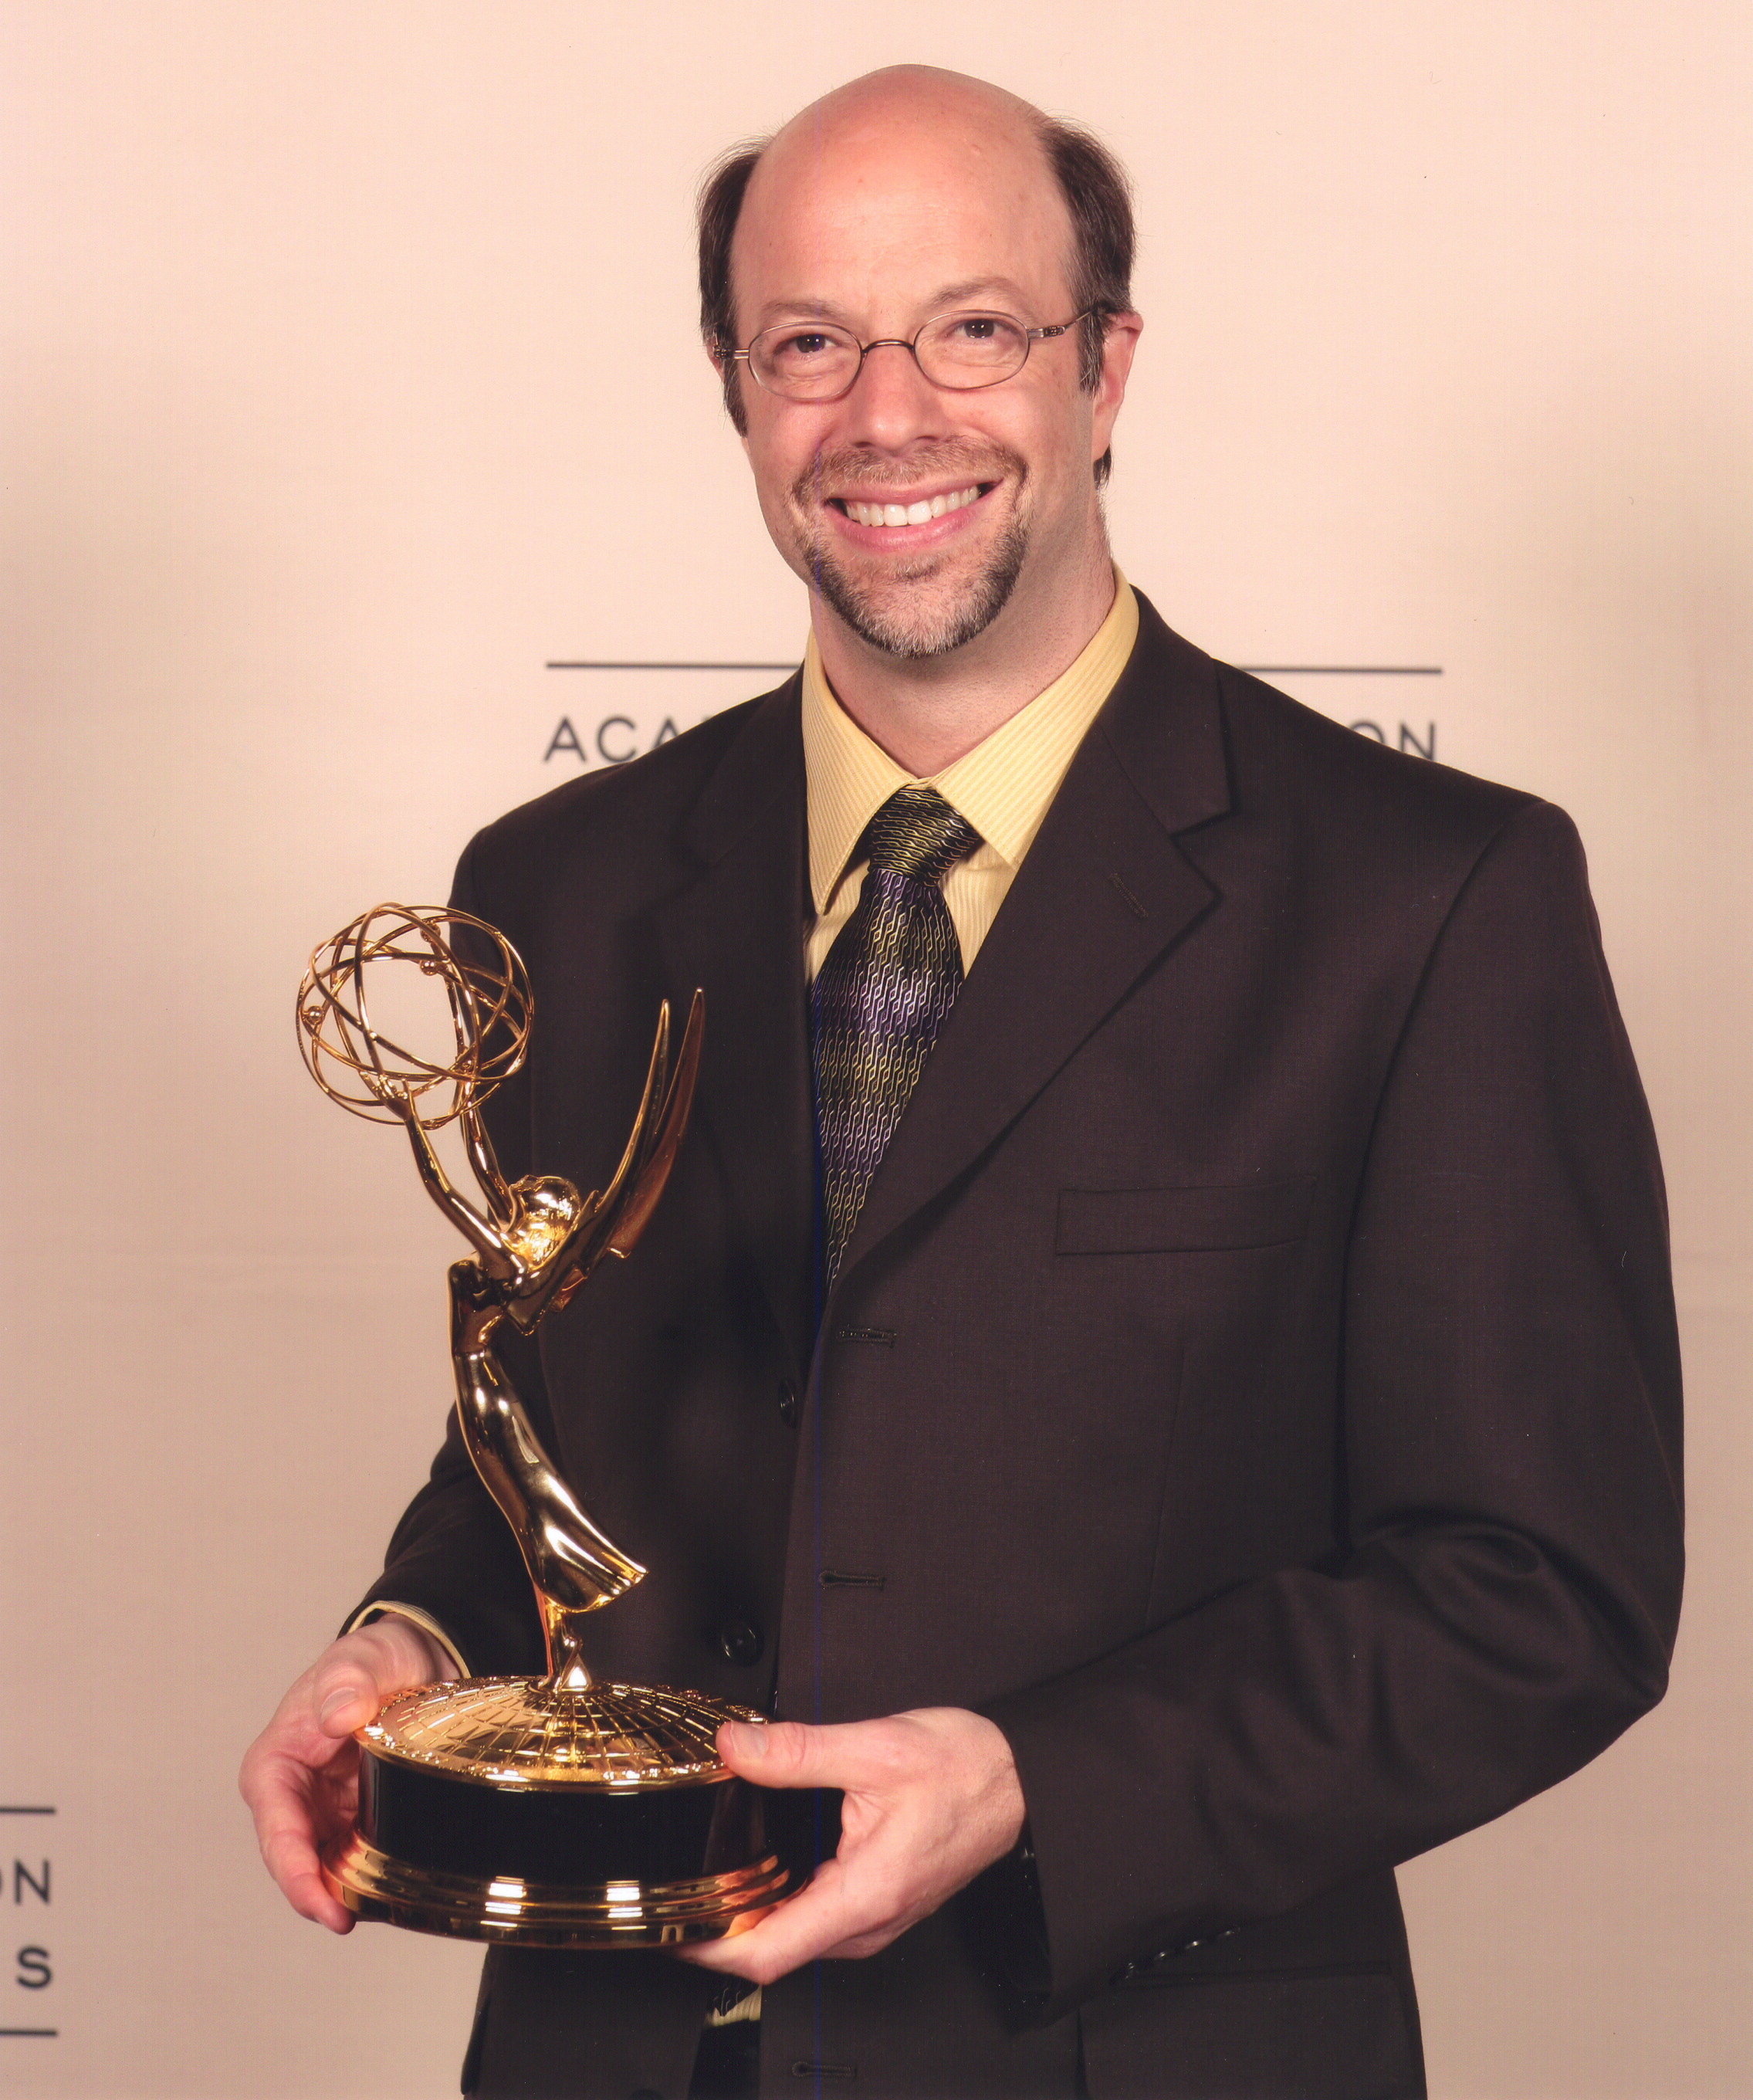 Daytime Emmy win in 2006 